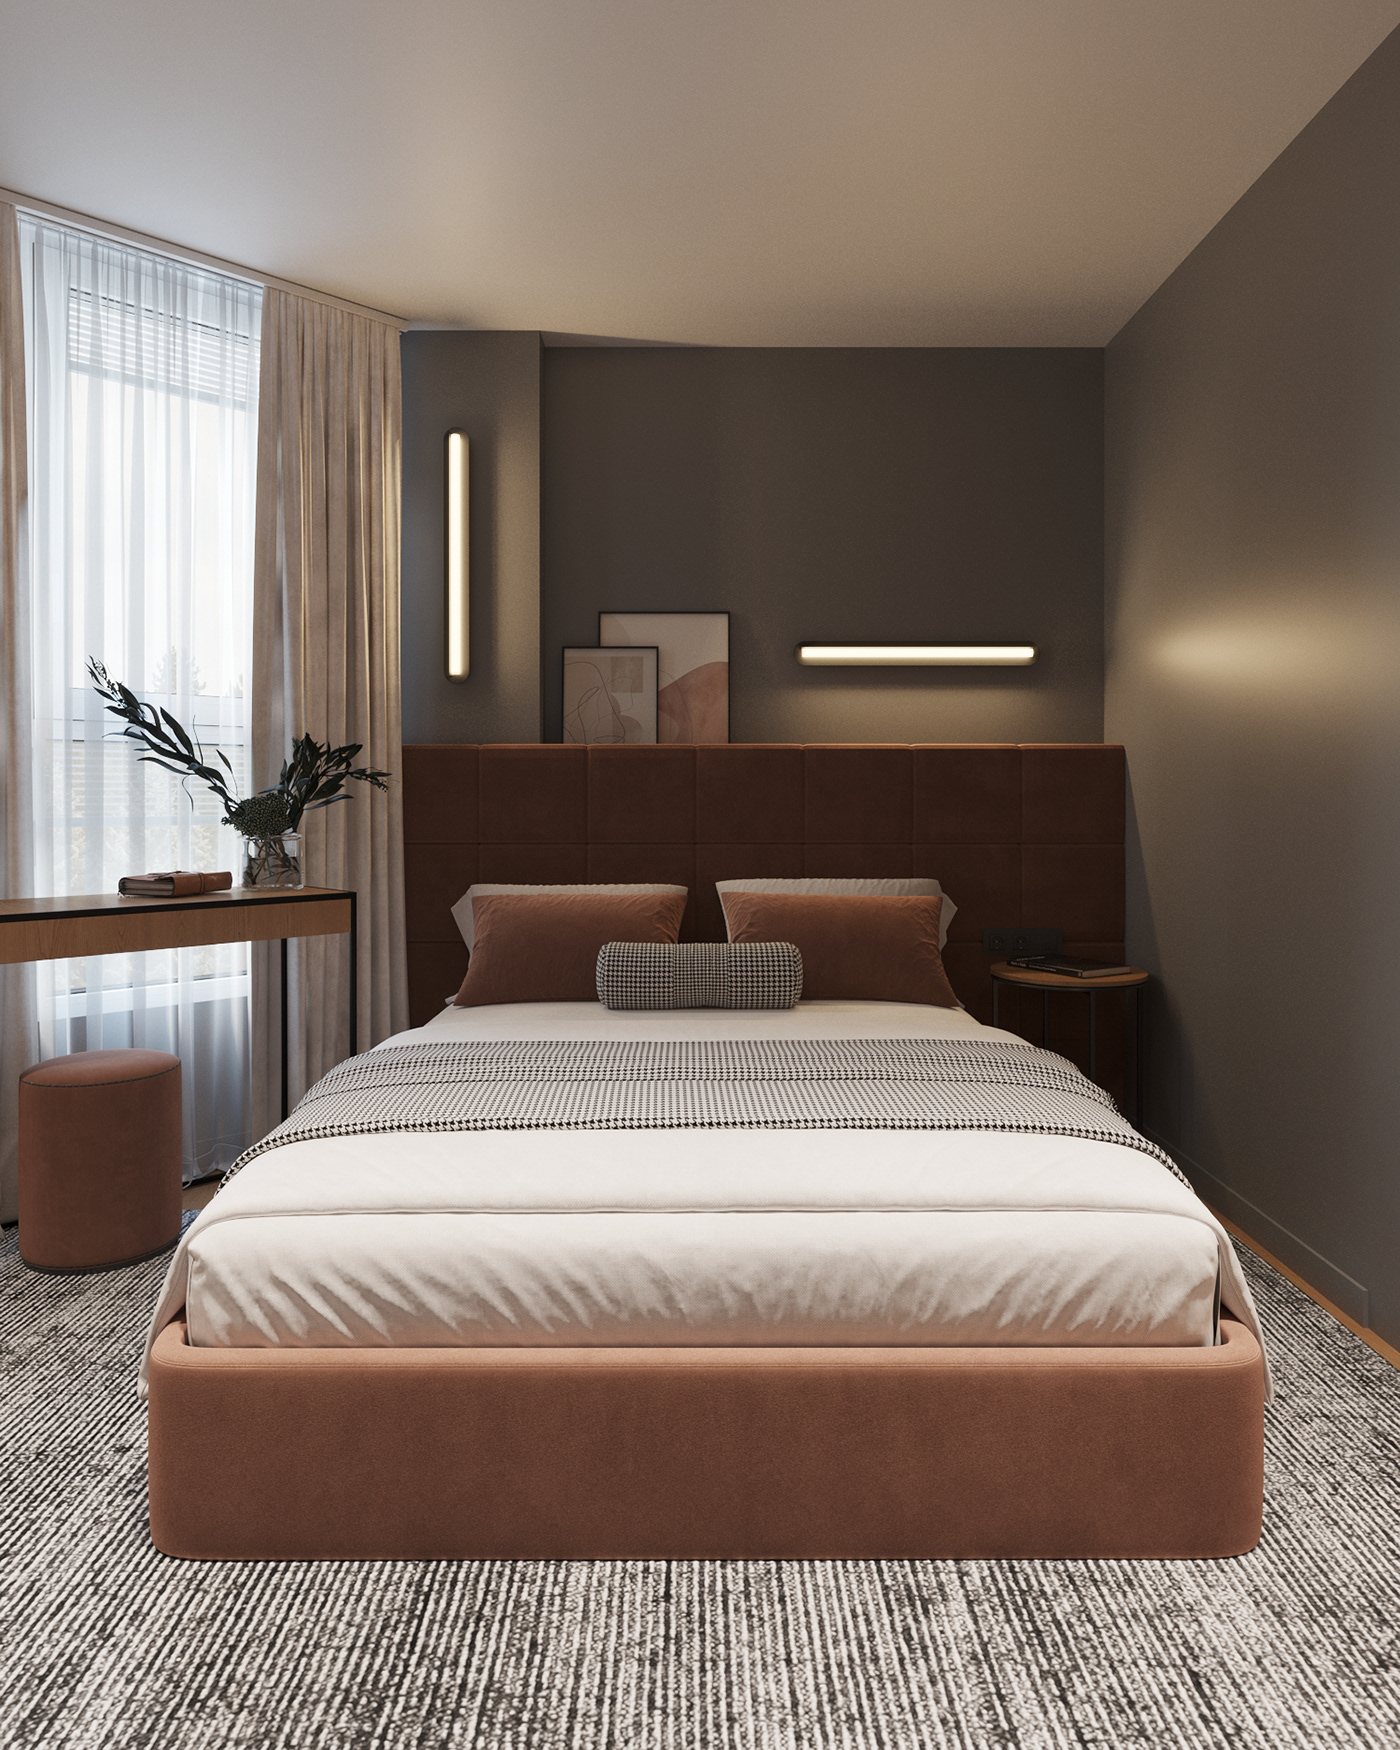 wardrobe bedroom mirror clothes visualization bed interior design  modern 3ds max Render